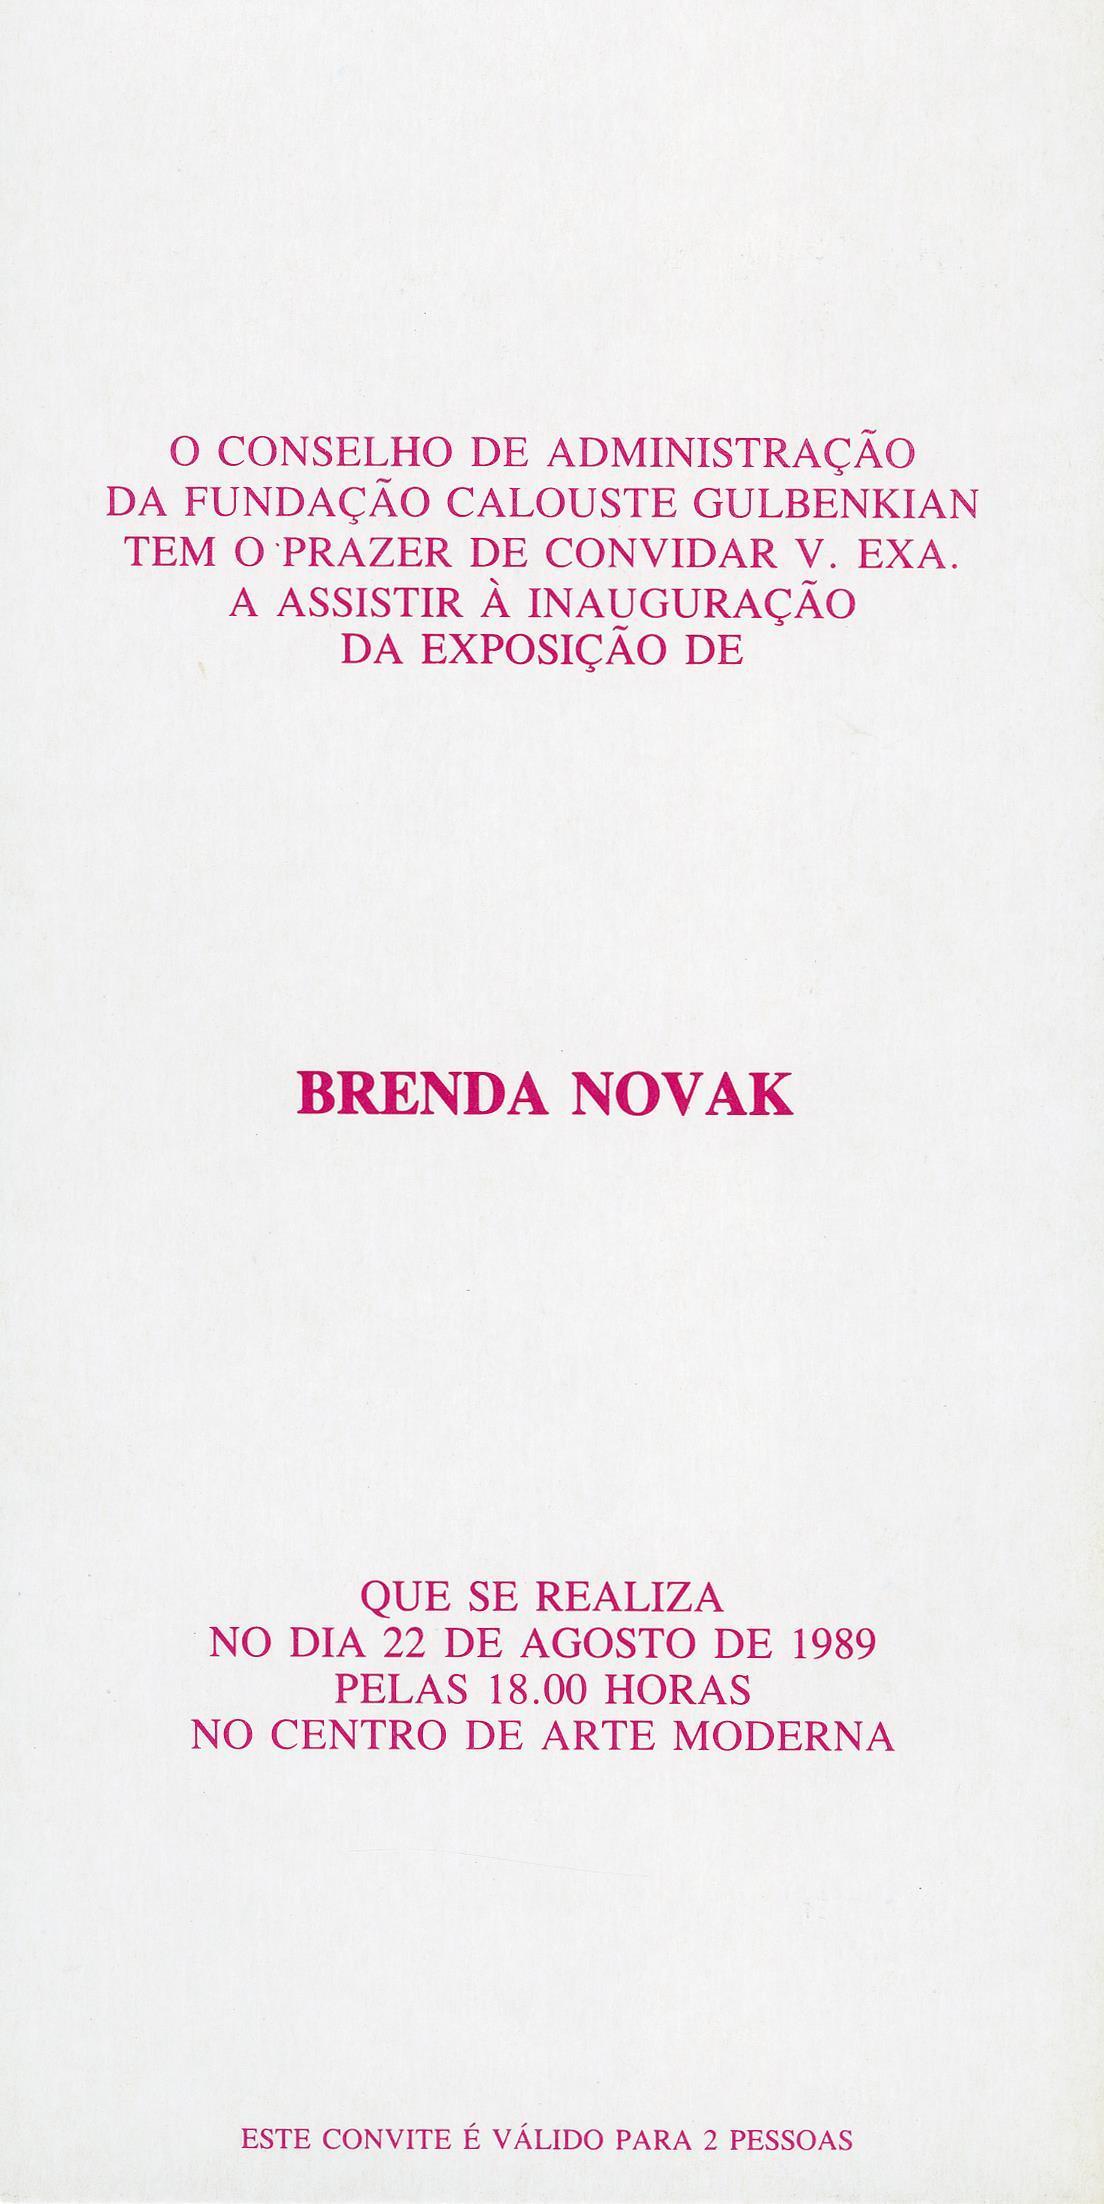 Brenda Novak